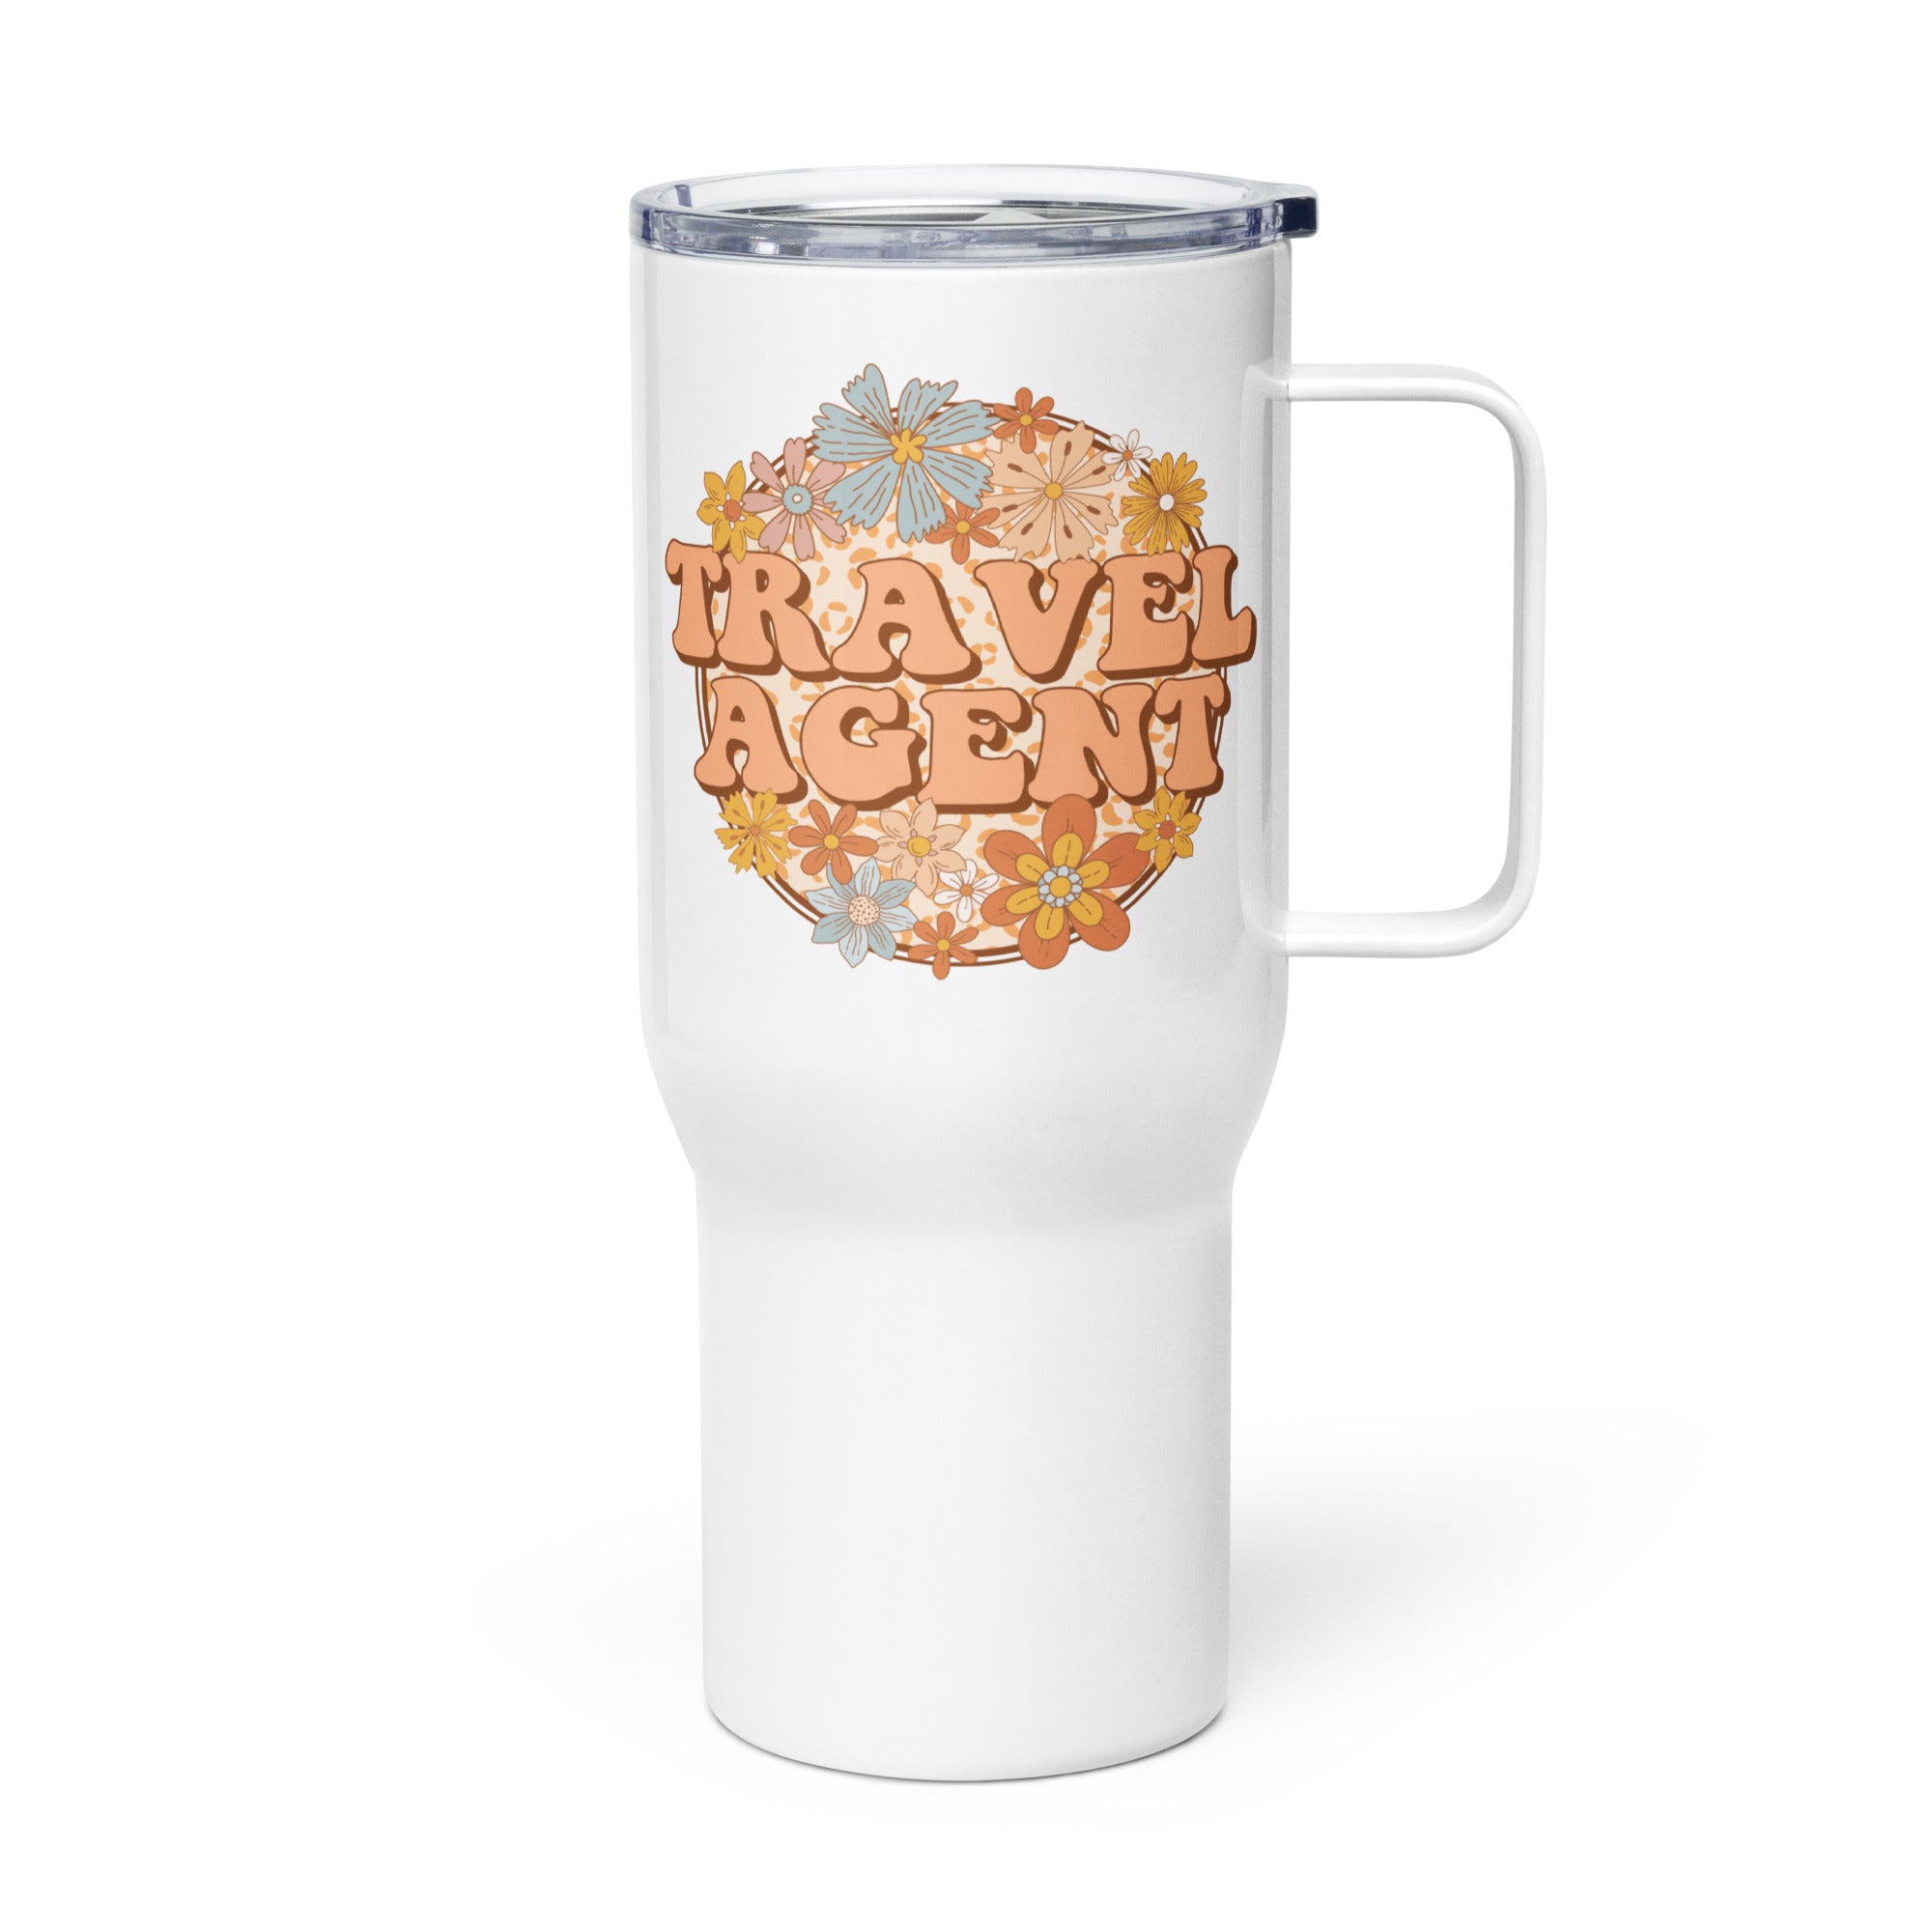 Travel Agent - Travel Mug